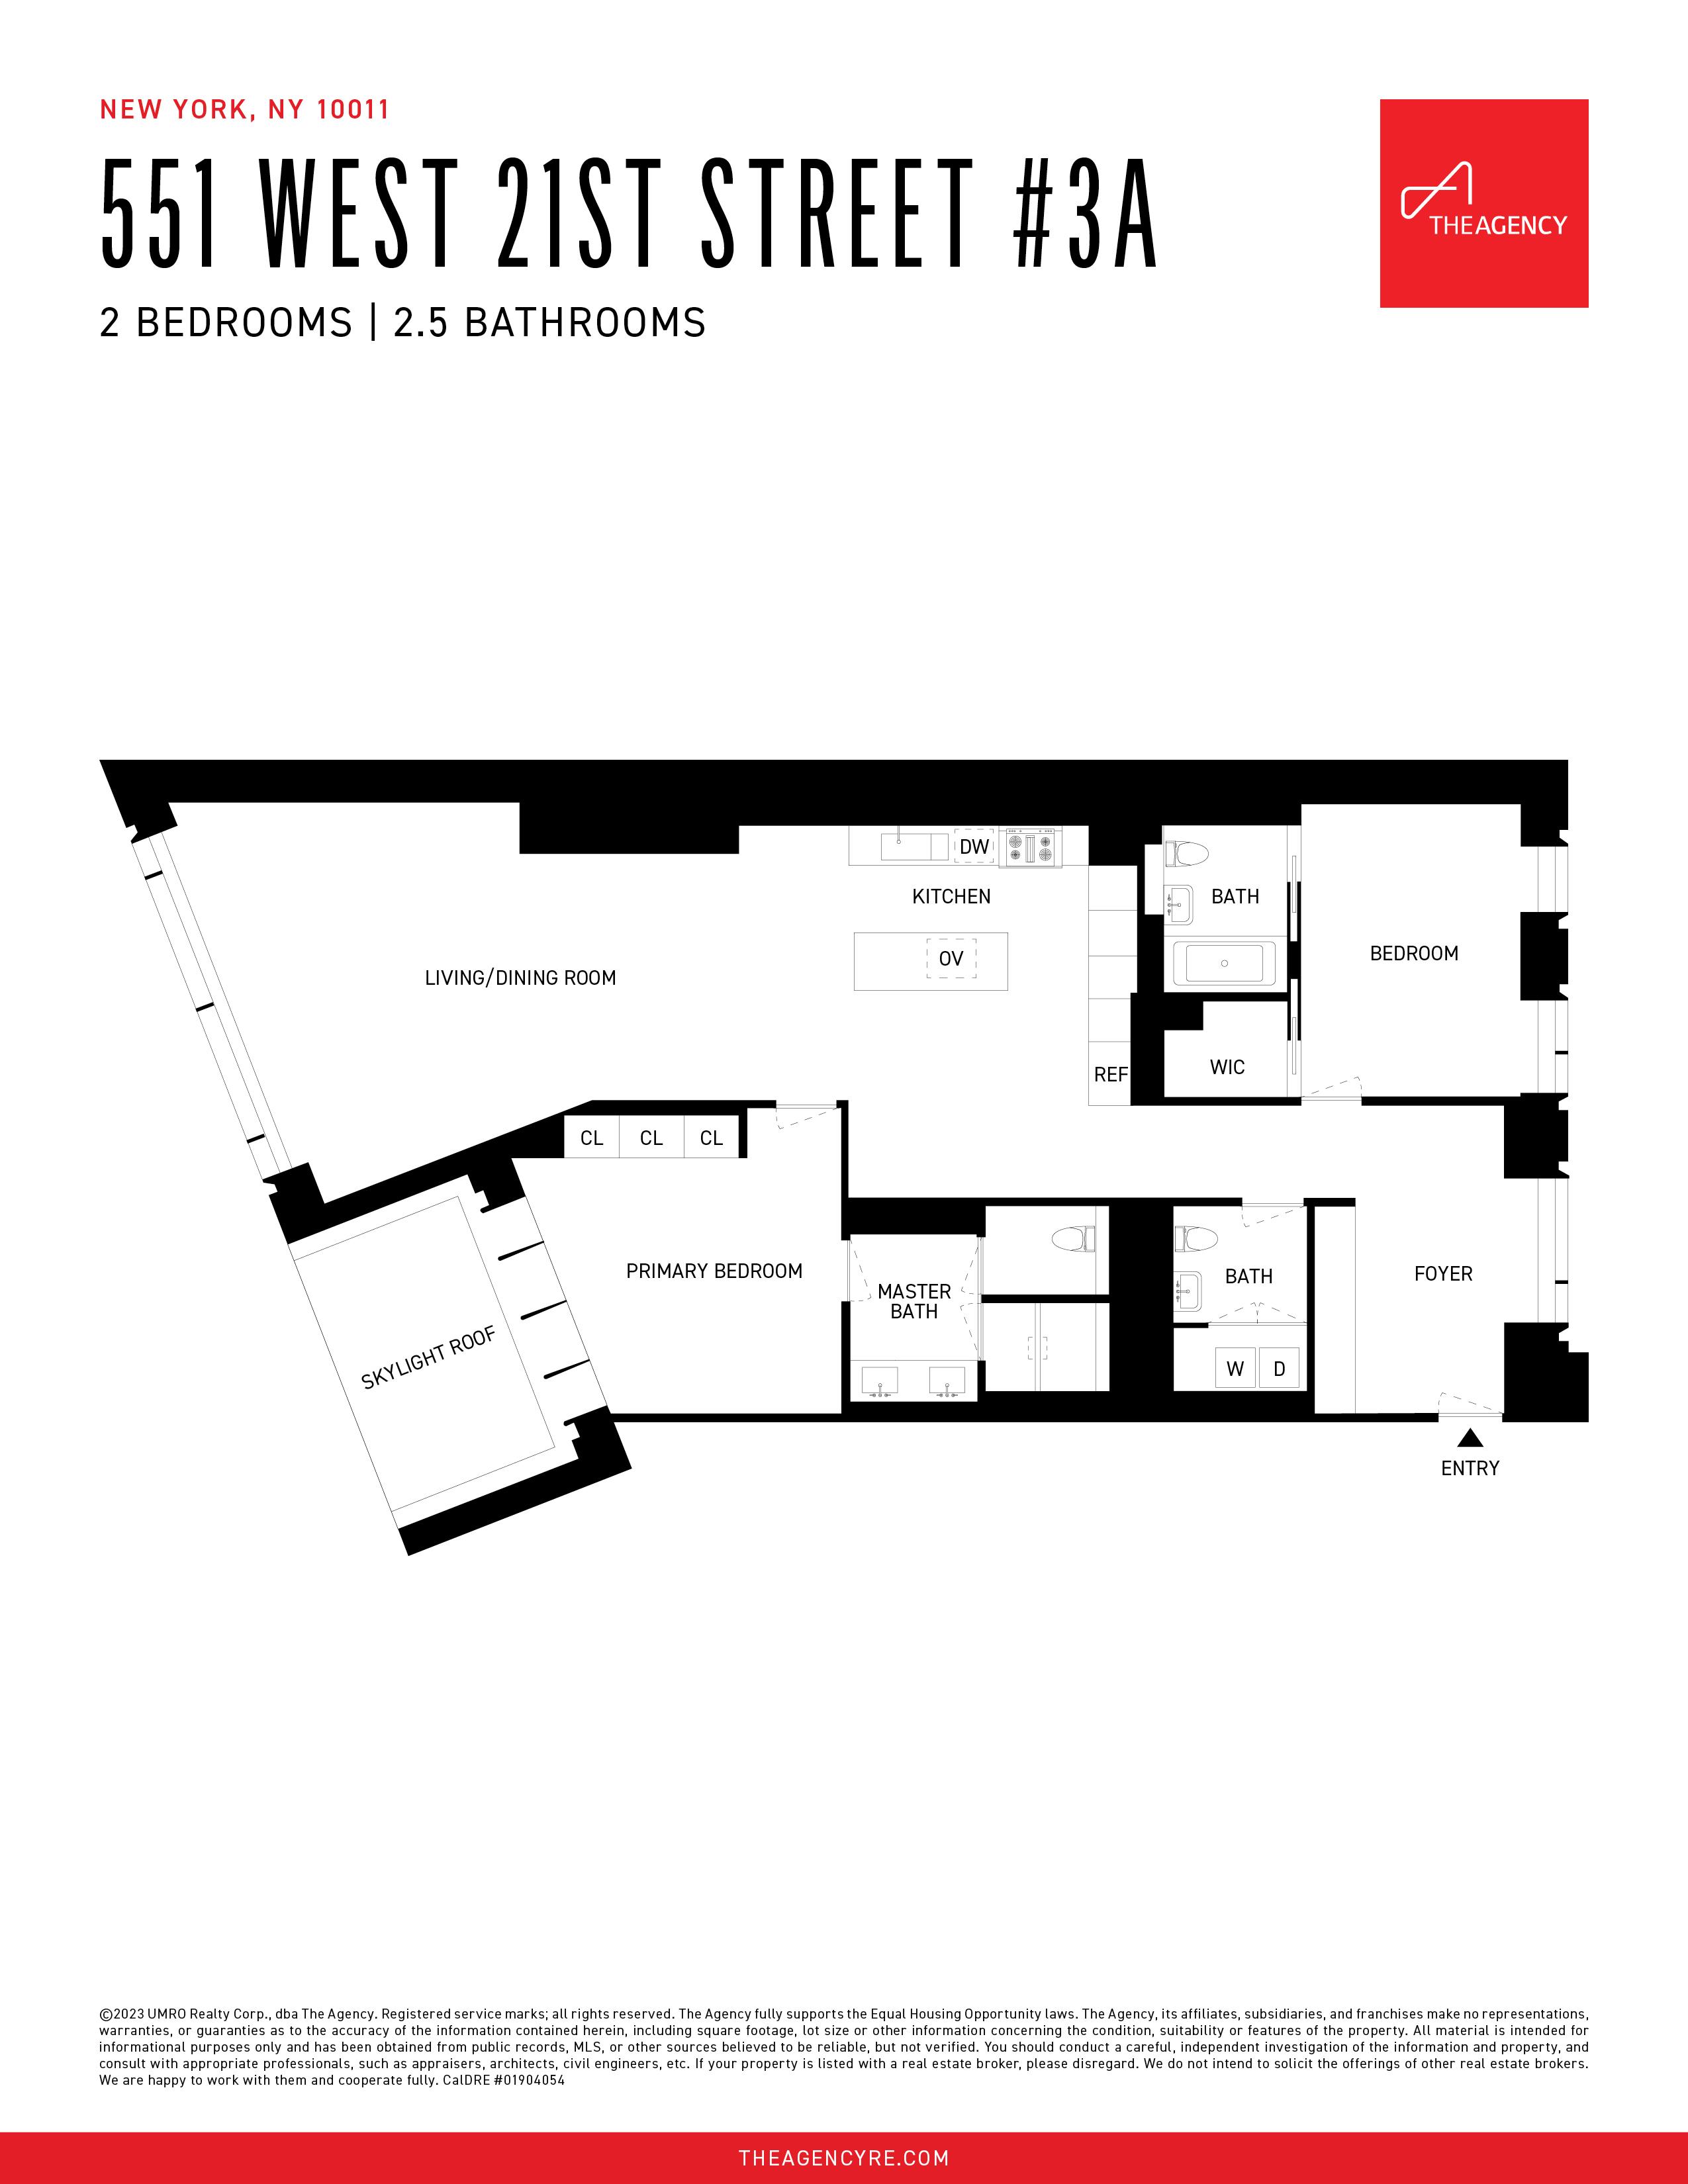 Floorplan for 551 West 21st Street, 3-A